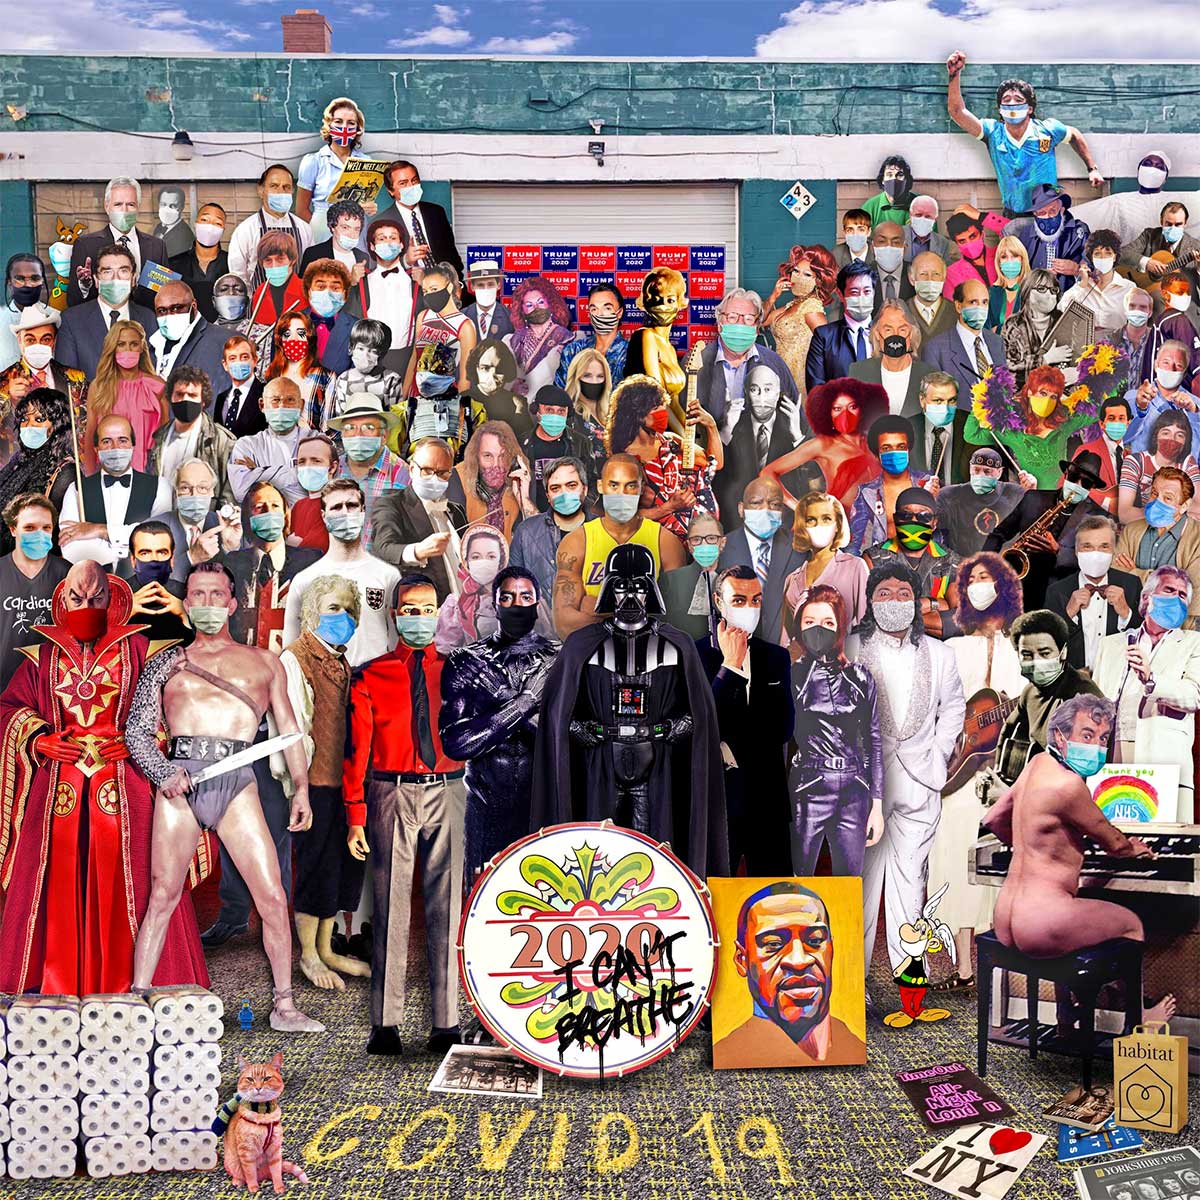 La portada homenaje a Sgt. Pepper's con las celebridades fallecidas en 2020, obra de Chris Barker